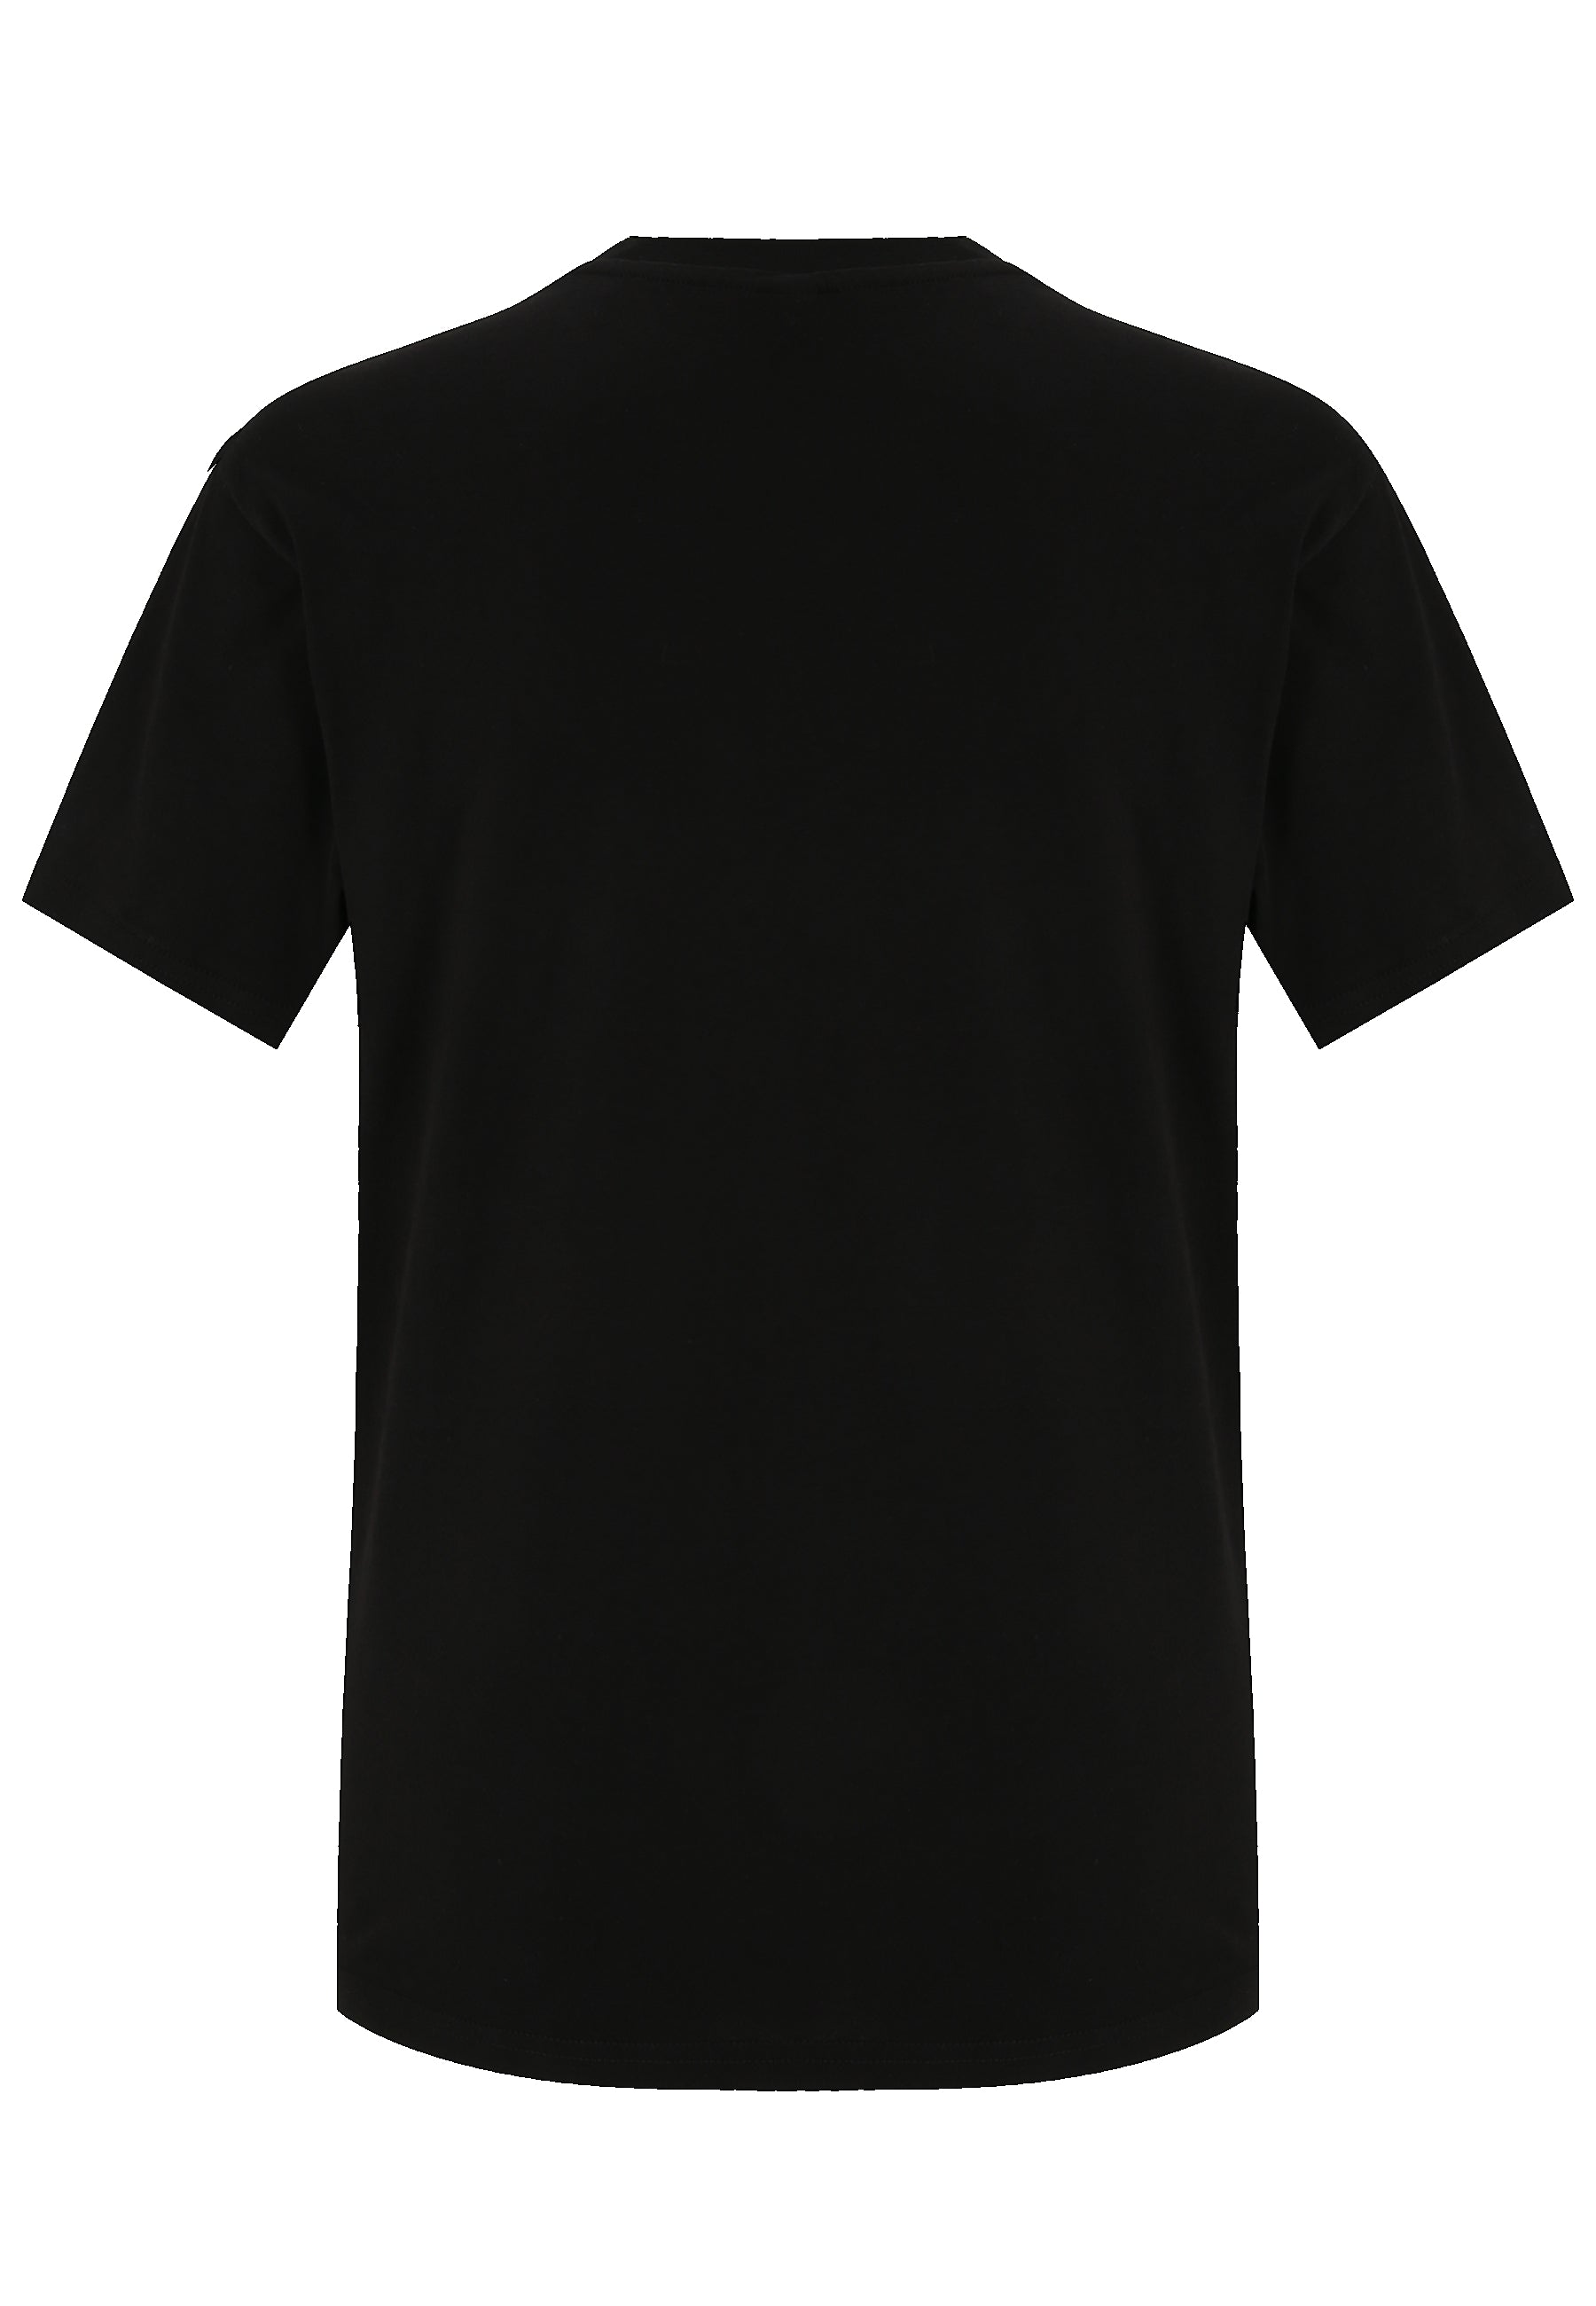 Bari Tee / Double Pack in Black-Black T-Shirts Fila   